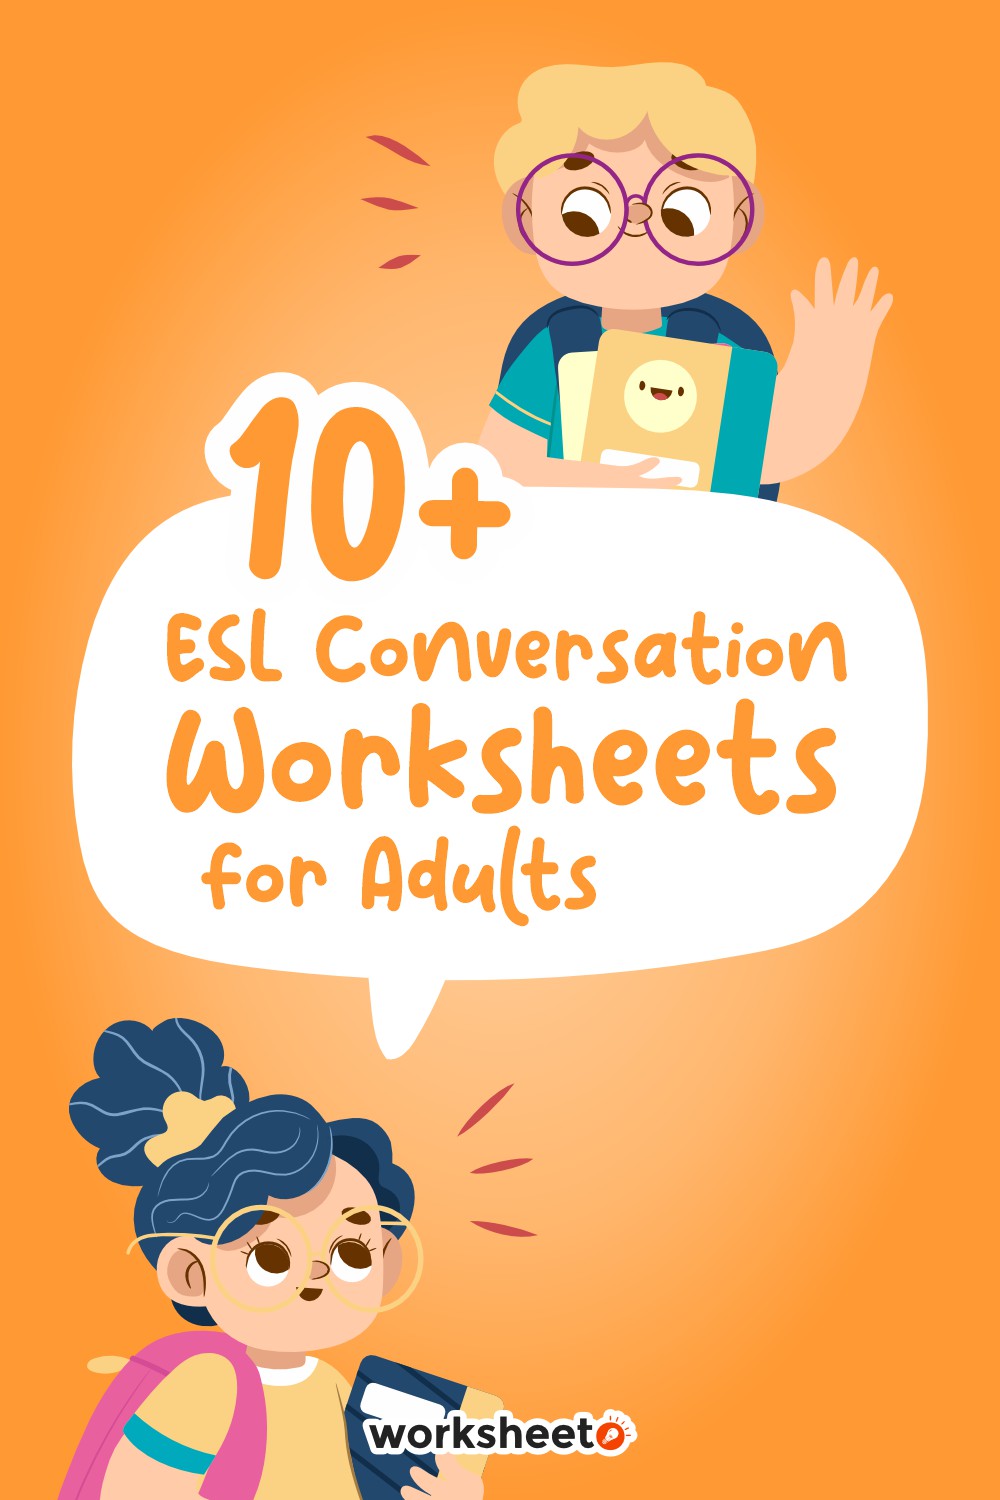 20-esl-conversation-worksheets-for-adults-free-pdf-at-worksheeto